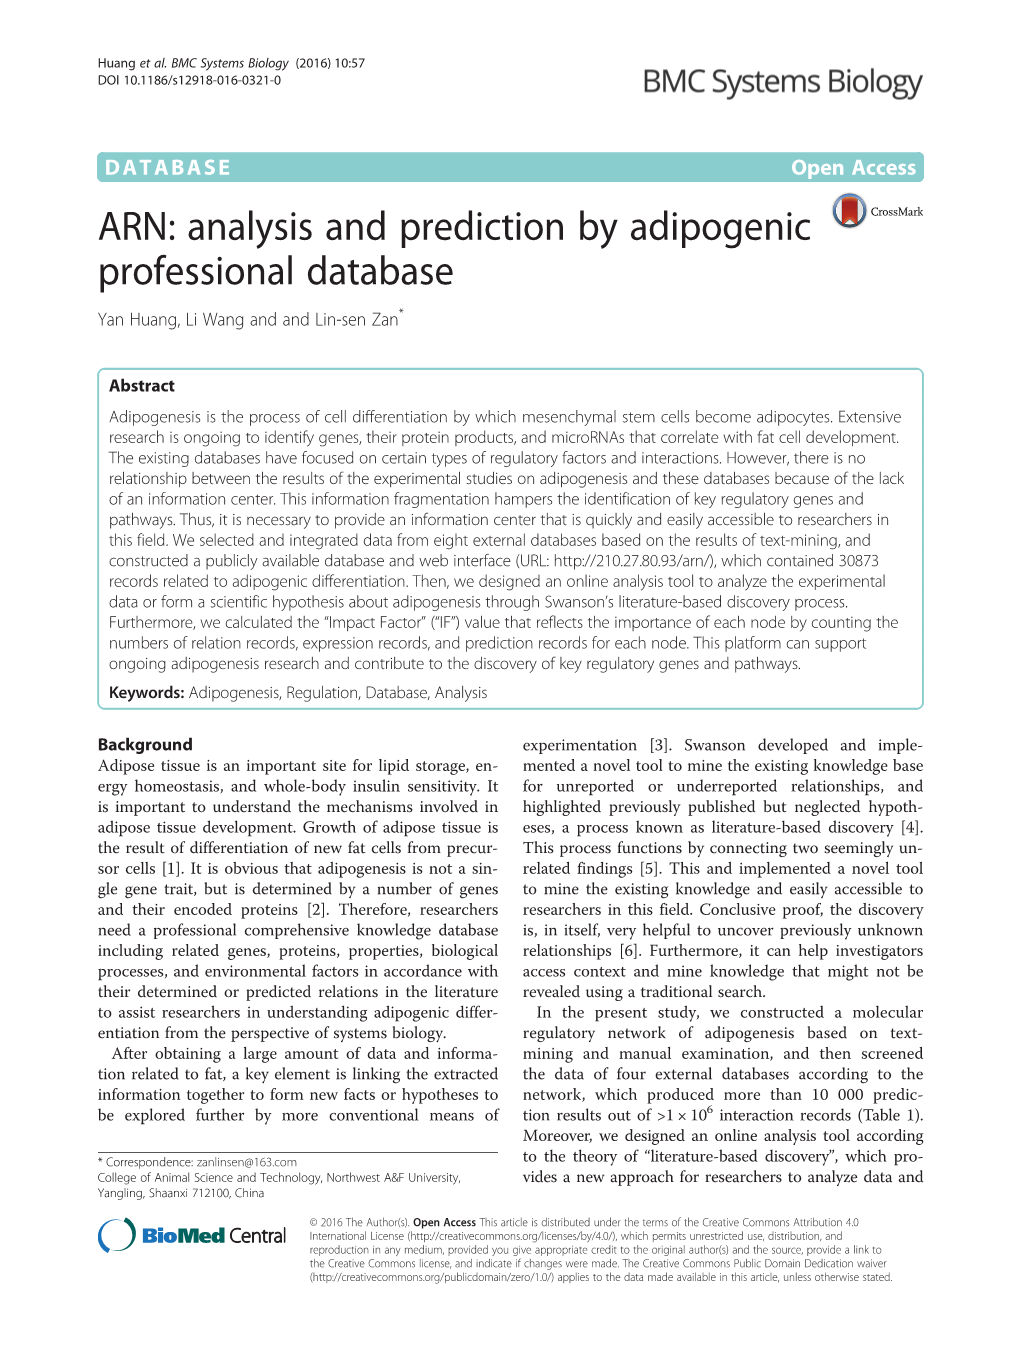 ARN: Analysis and Prediction by Adipogenic Professional Database Yan Huang, Li Wang and and Lin-Sen Zan*